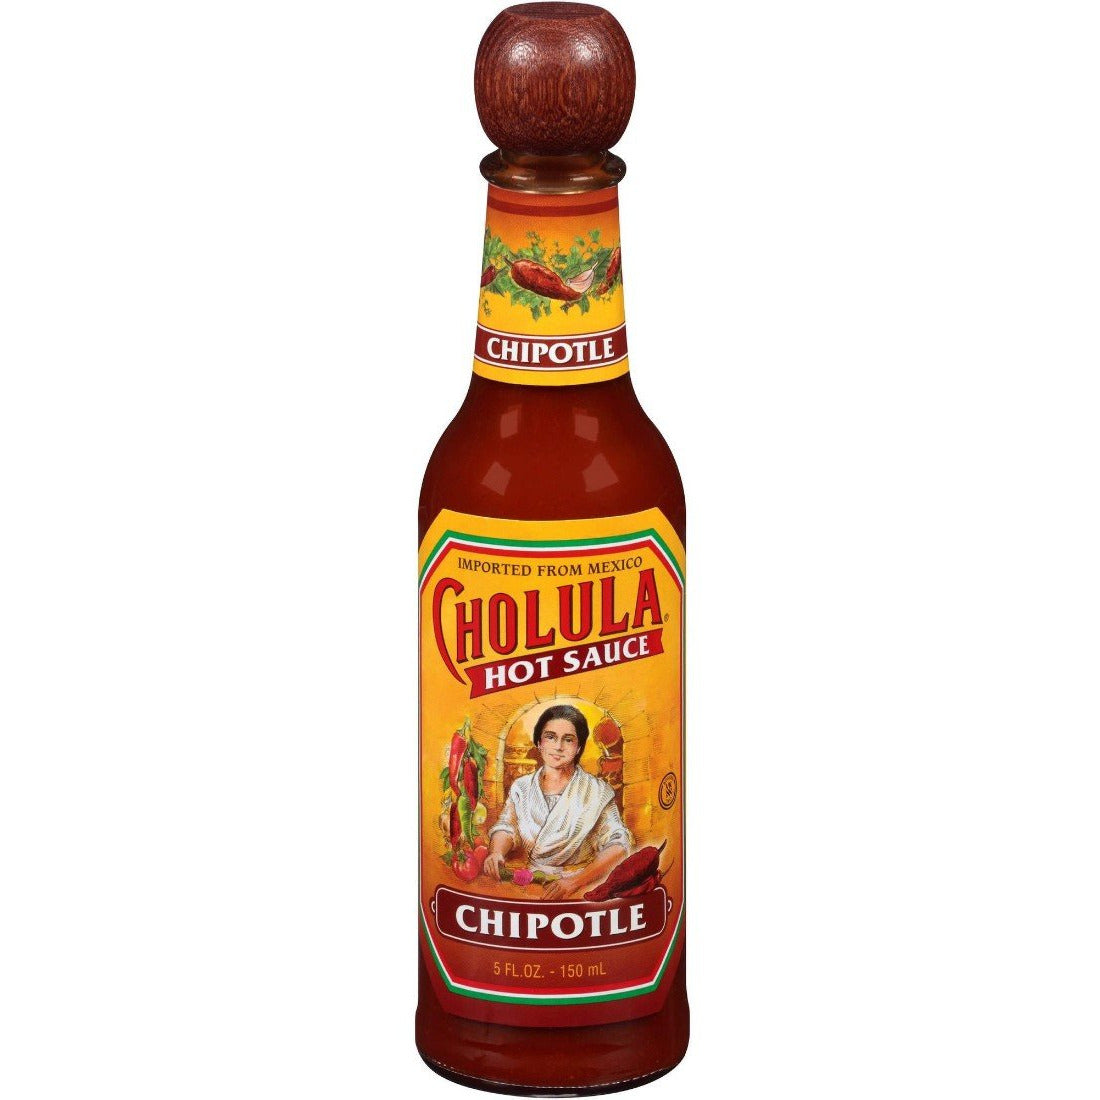 Cholula Chipotle Hot Sauce 148ml (5oz)